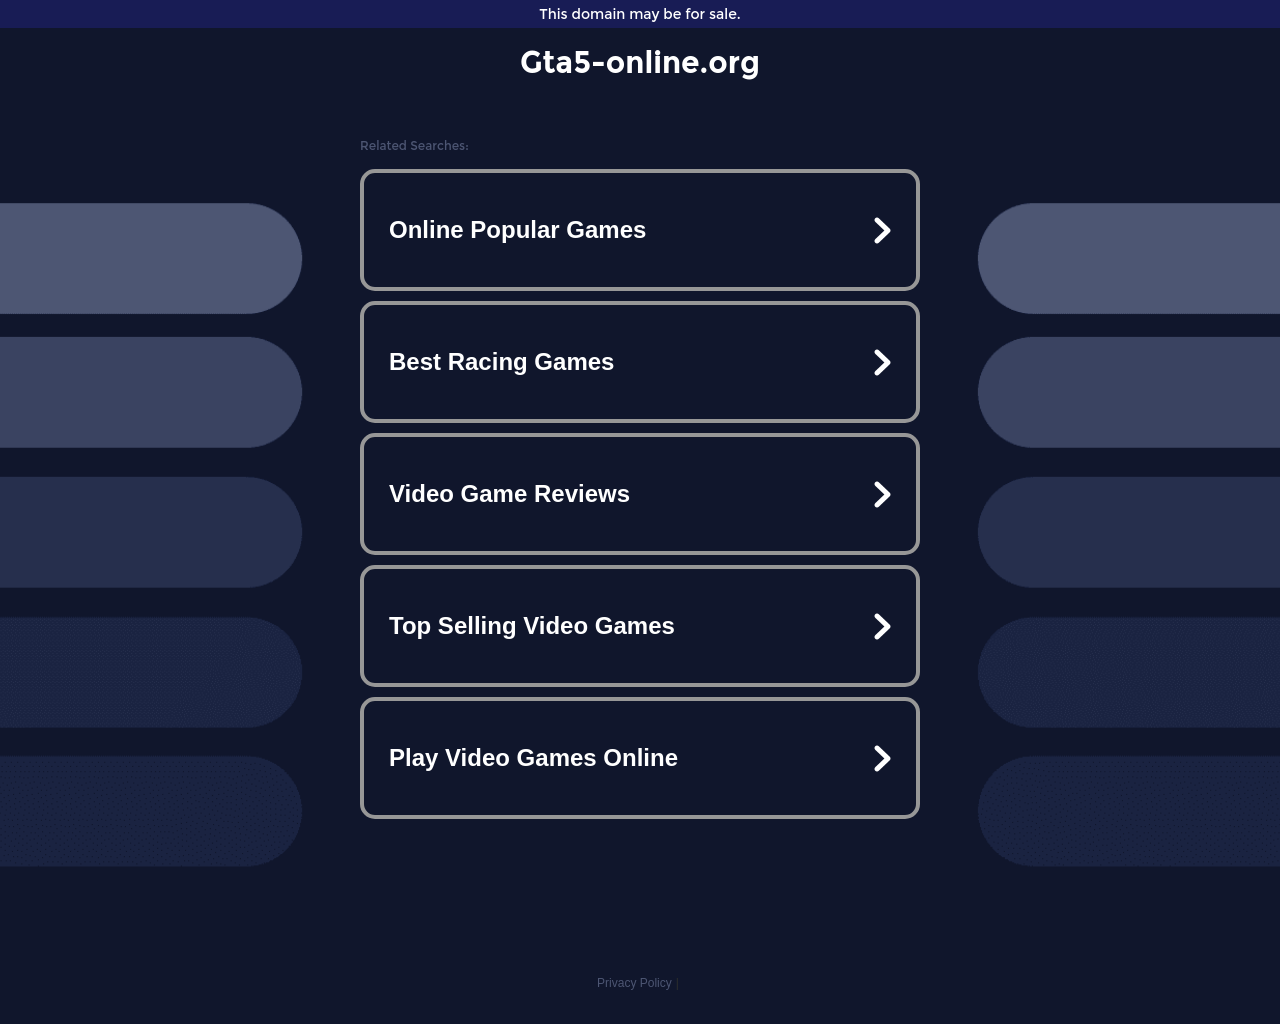 gta5-online.org